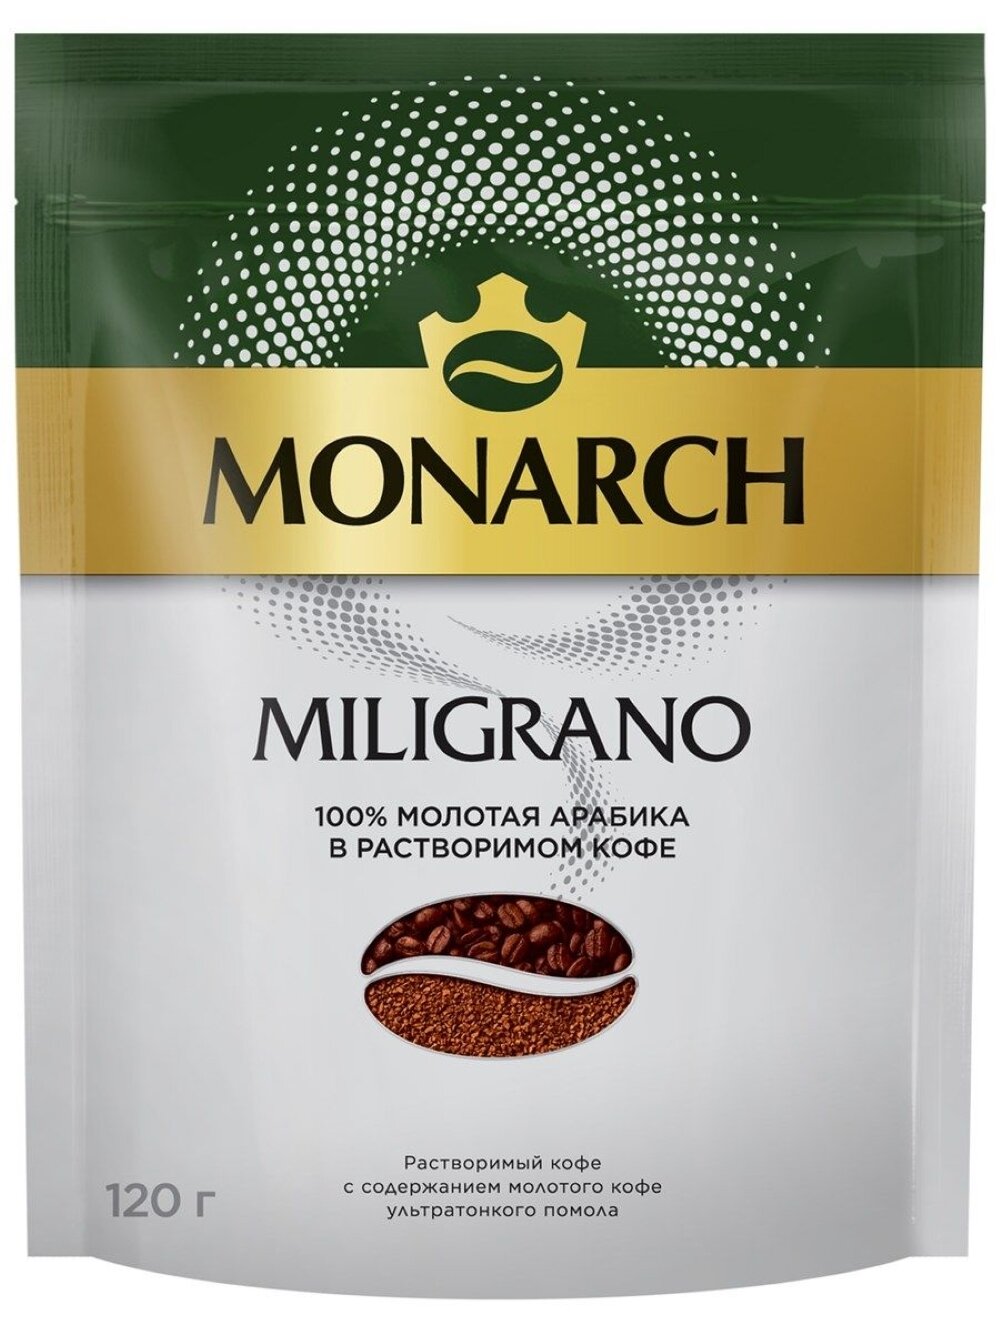 Кофе растворимый Monarch Miligrano 120 г